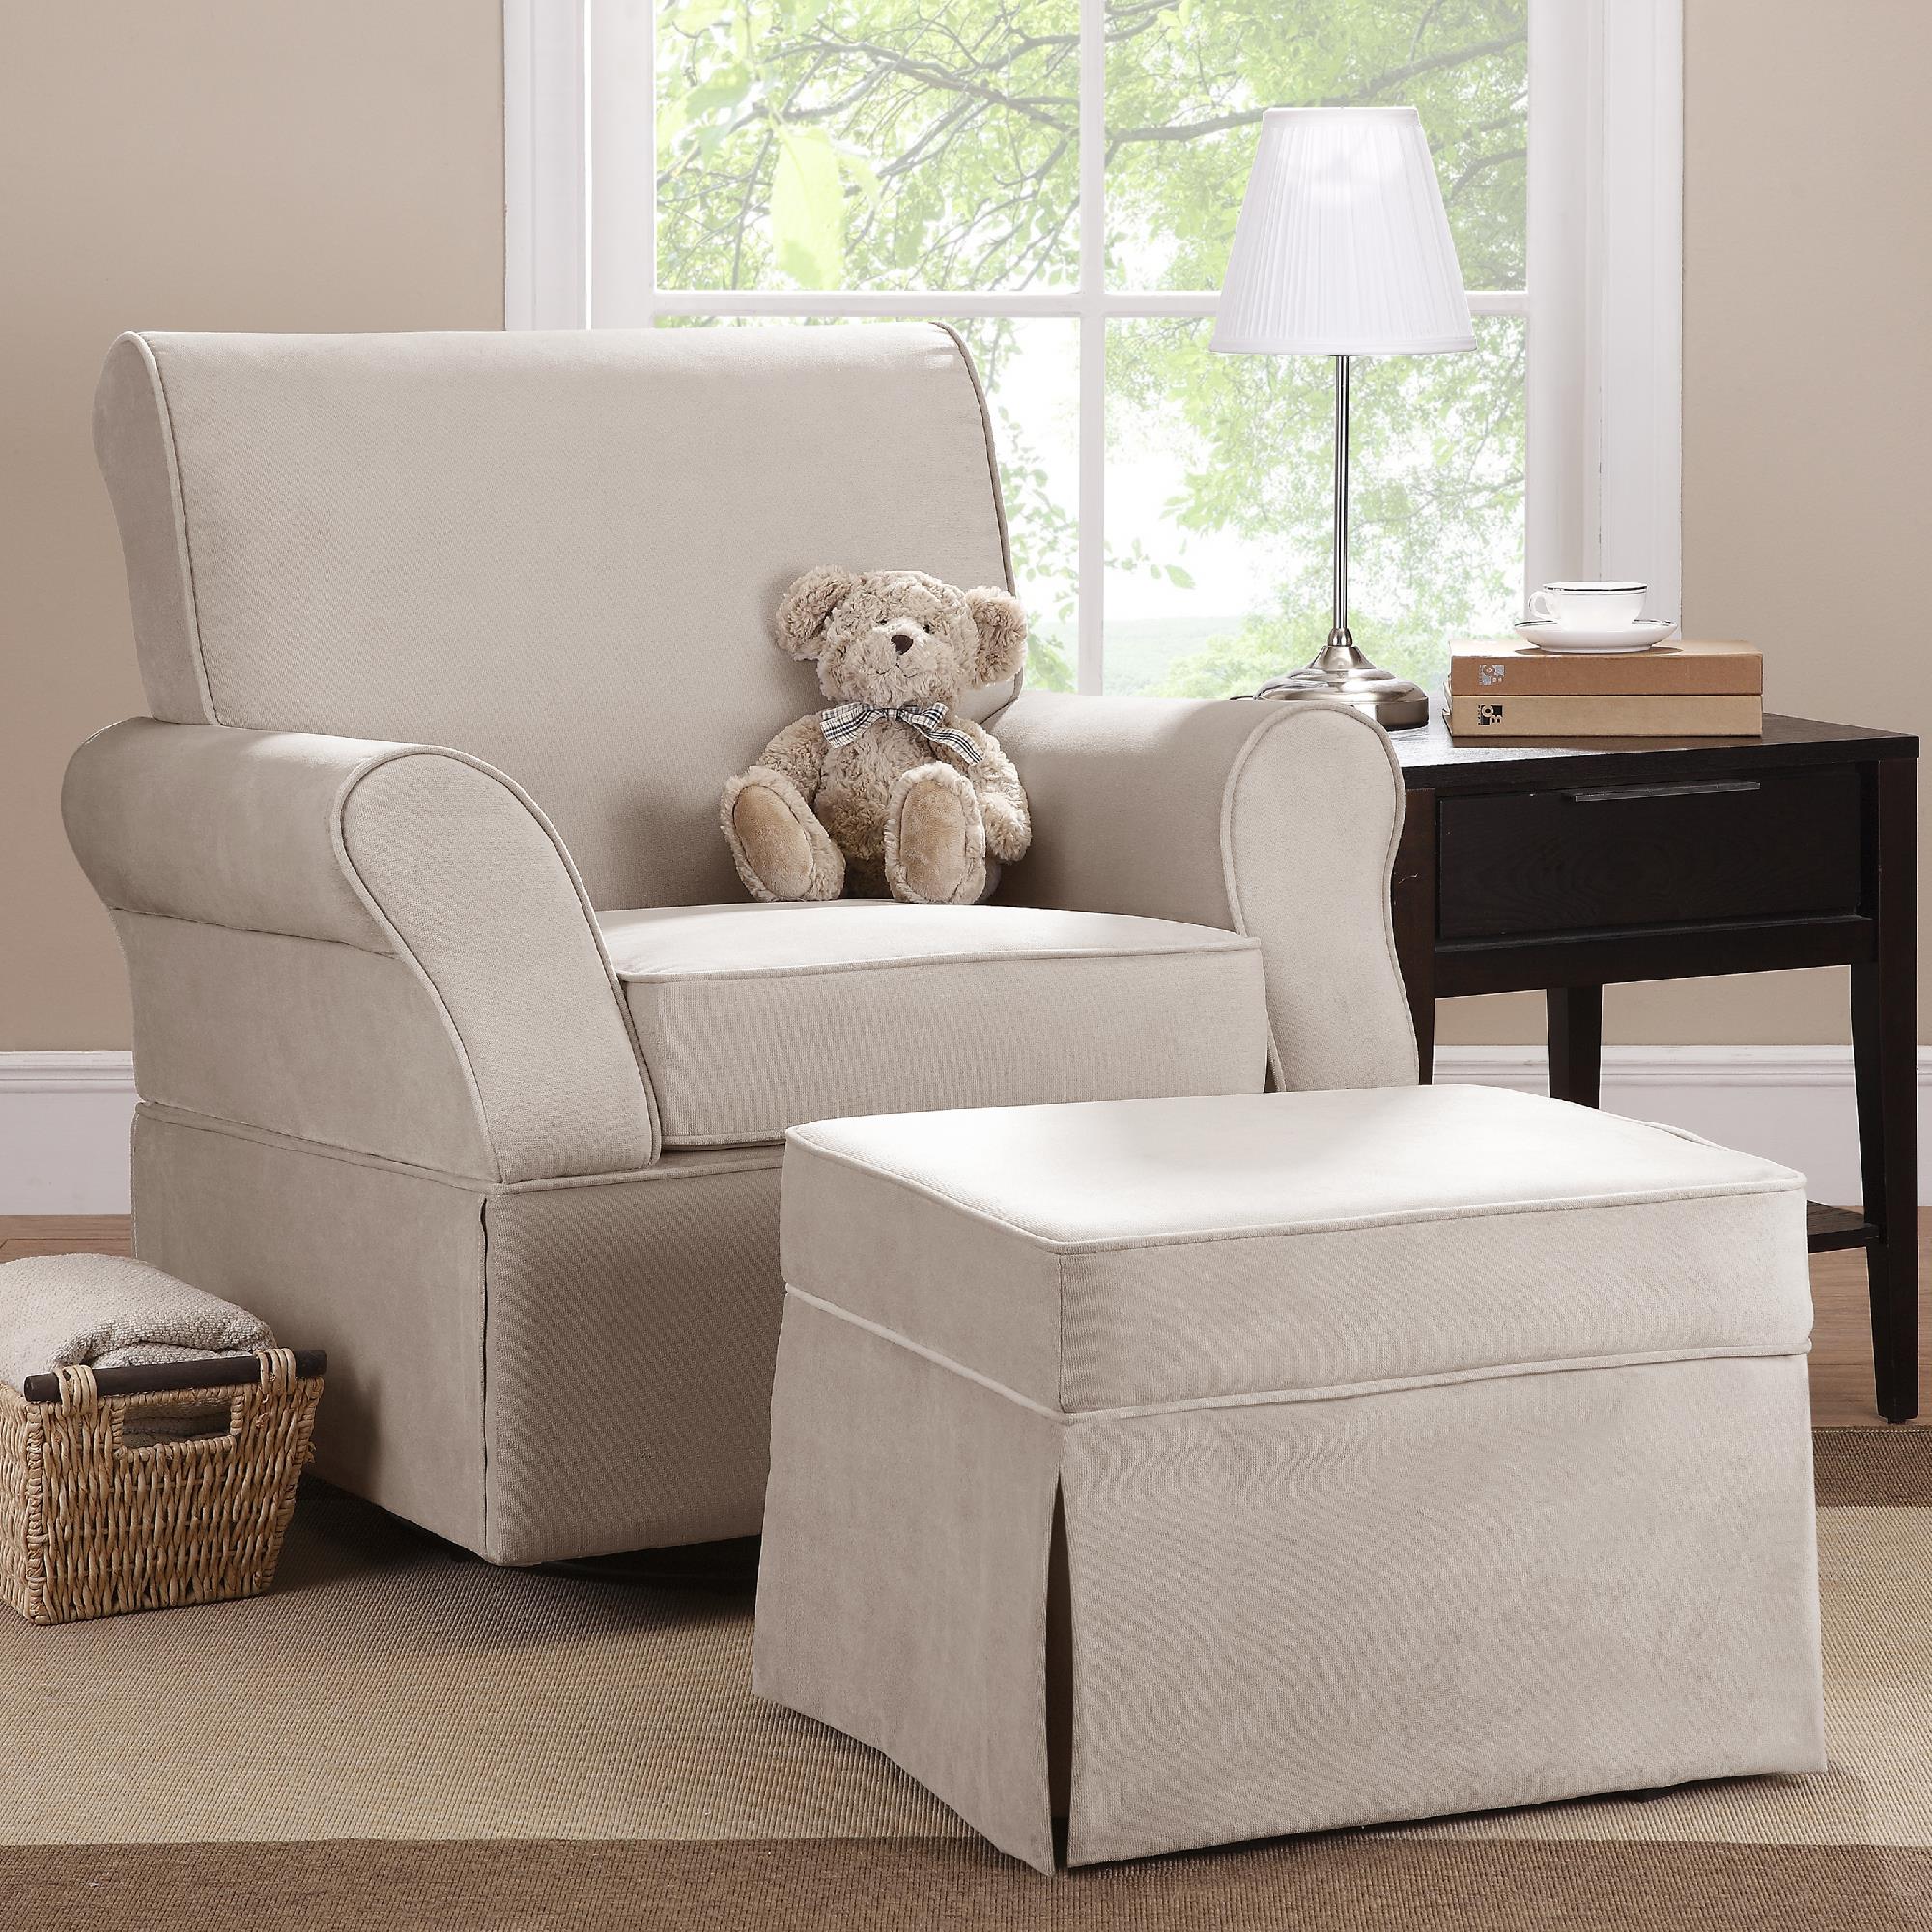 Baby Relax Kelcie Swivel Glider Chair & Ottoman Nursery Set, Beige Microfiber - image 1 of 15